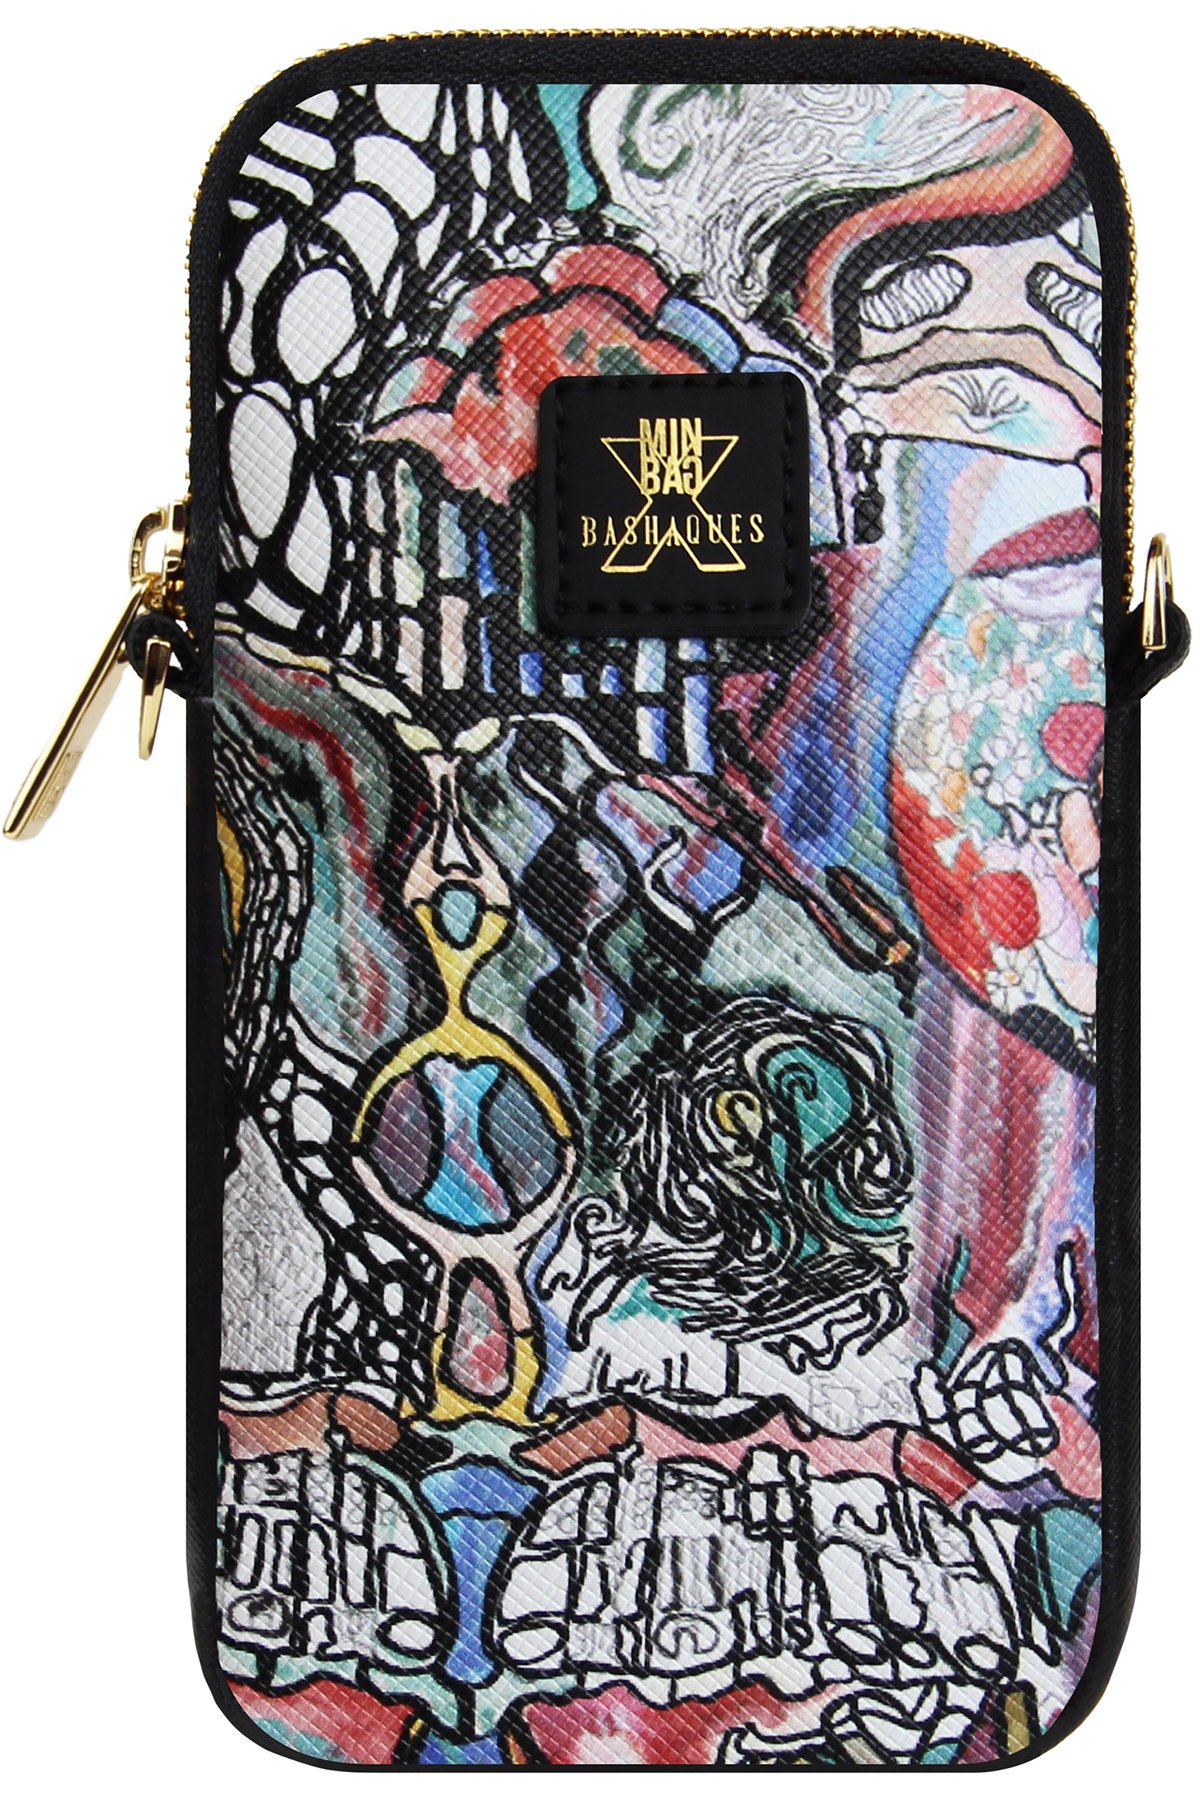 Bashaques x Minbag Phone Bag (Gaudi)